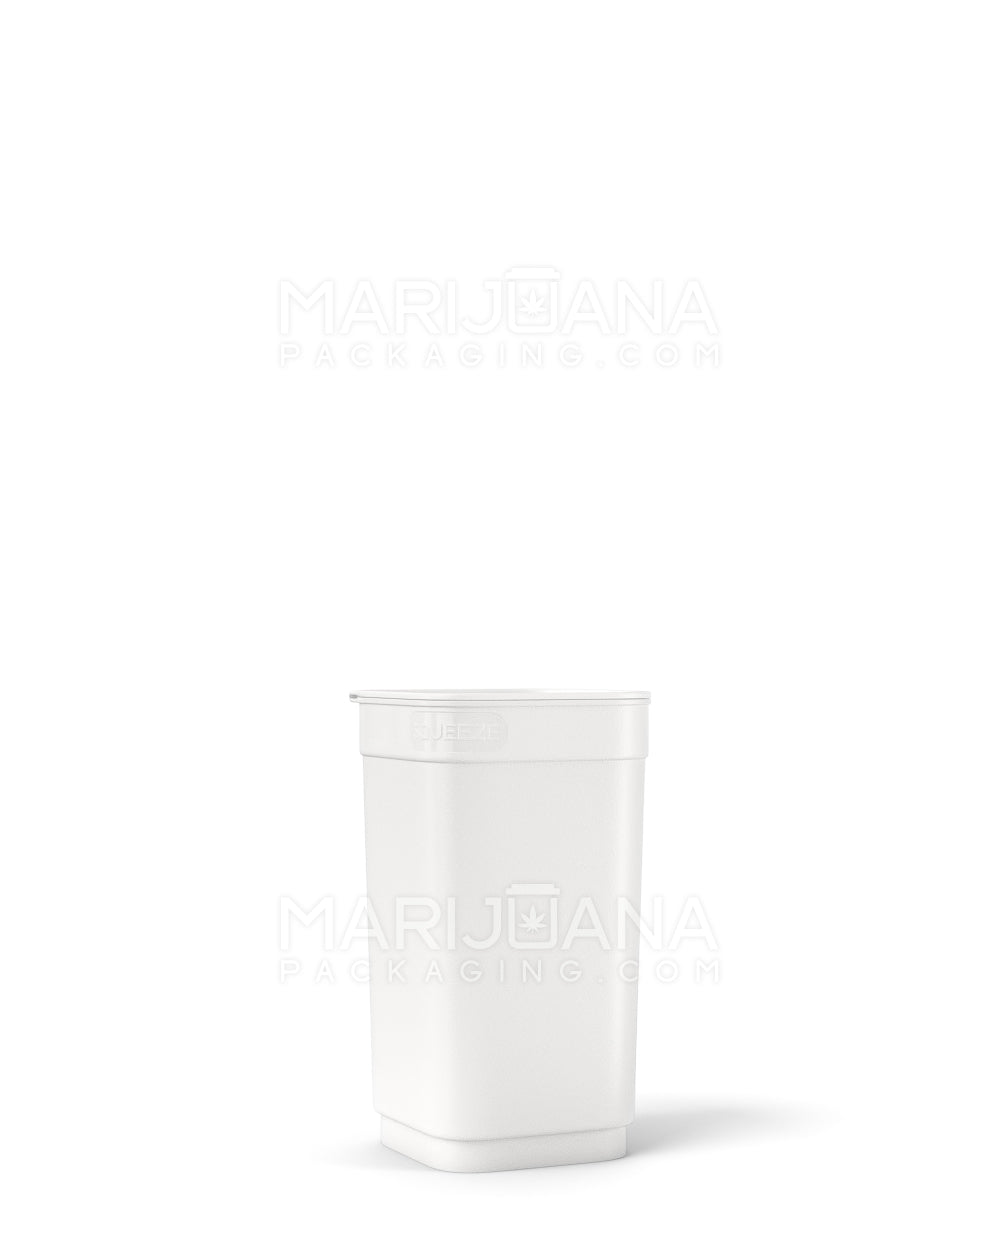 POLLEN GEAR | Child Resistant 100% Recyclable Opaque White Pop Box Pop Top Bottles | 20dr - 3.5g - 590 Count